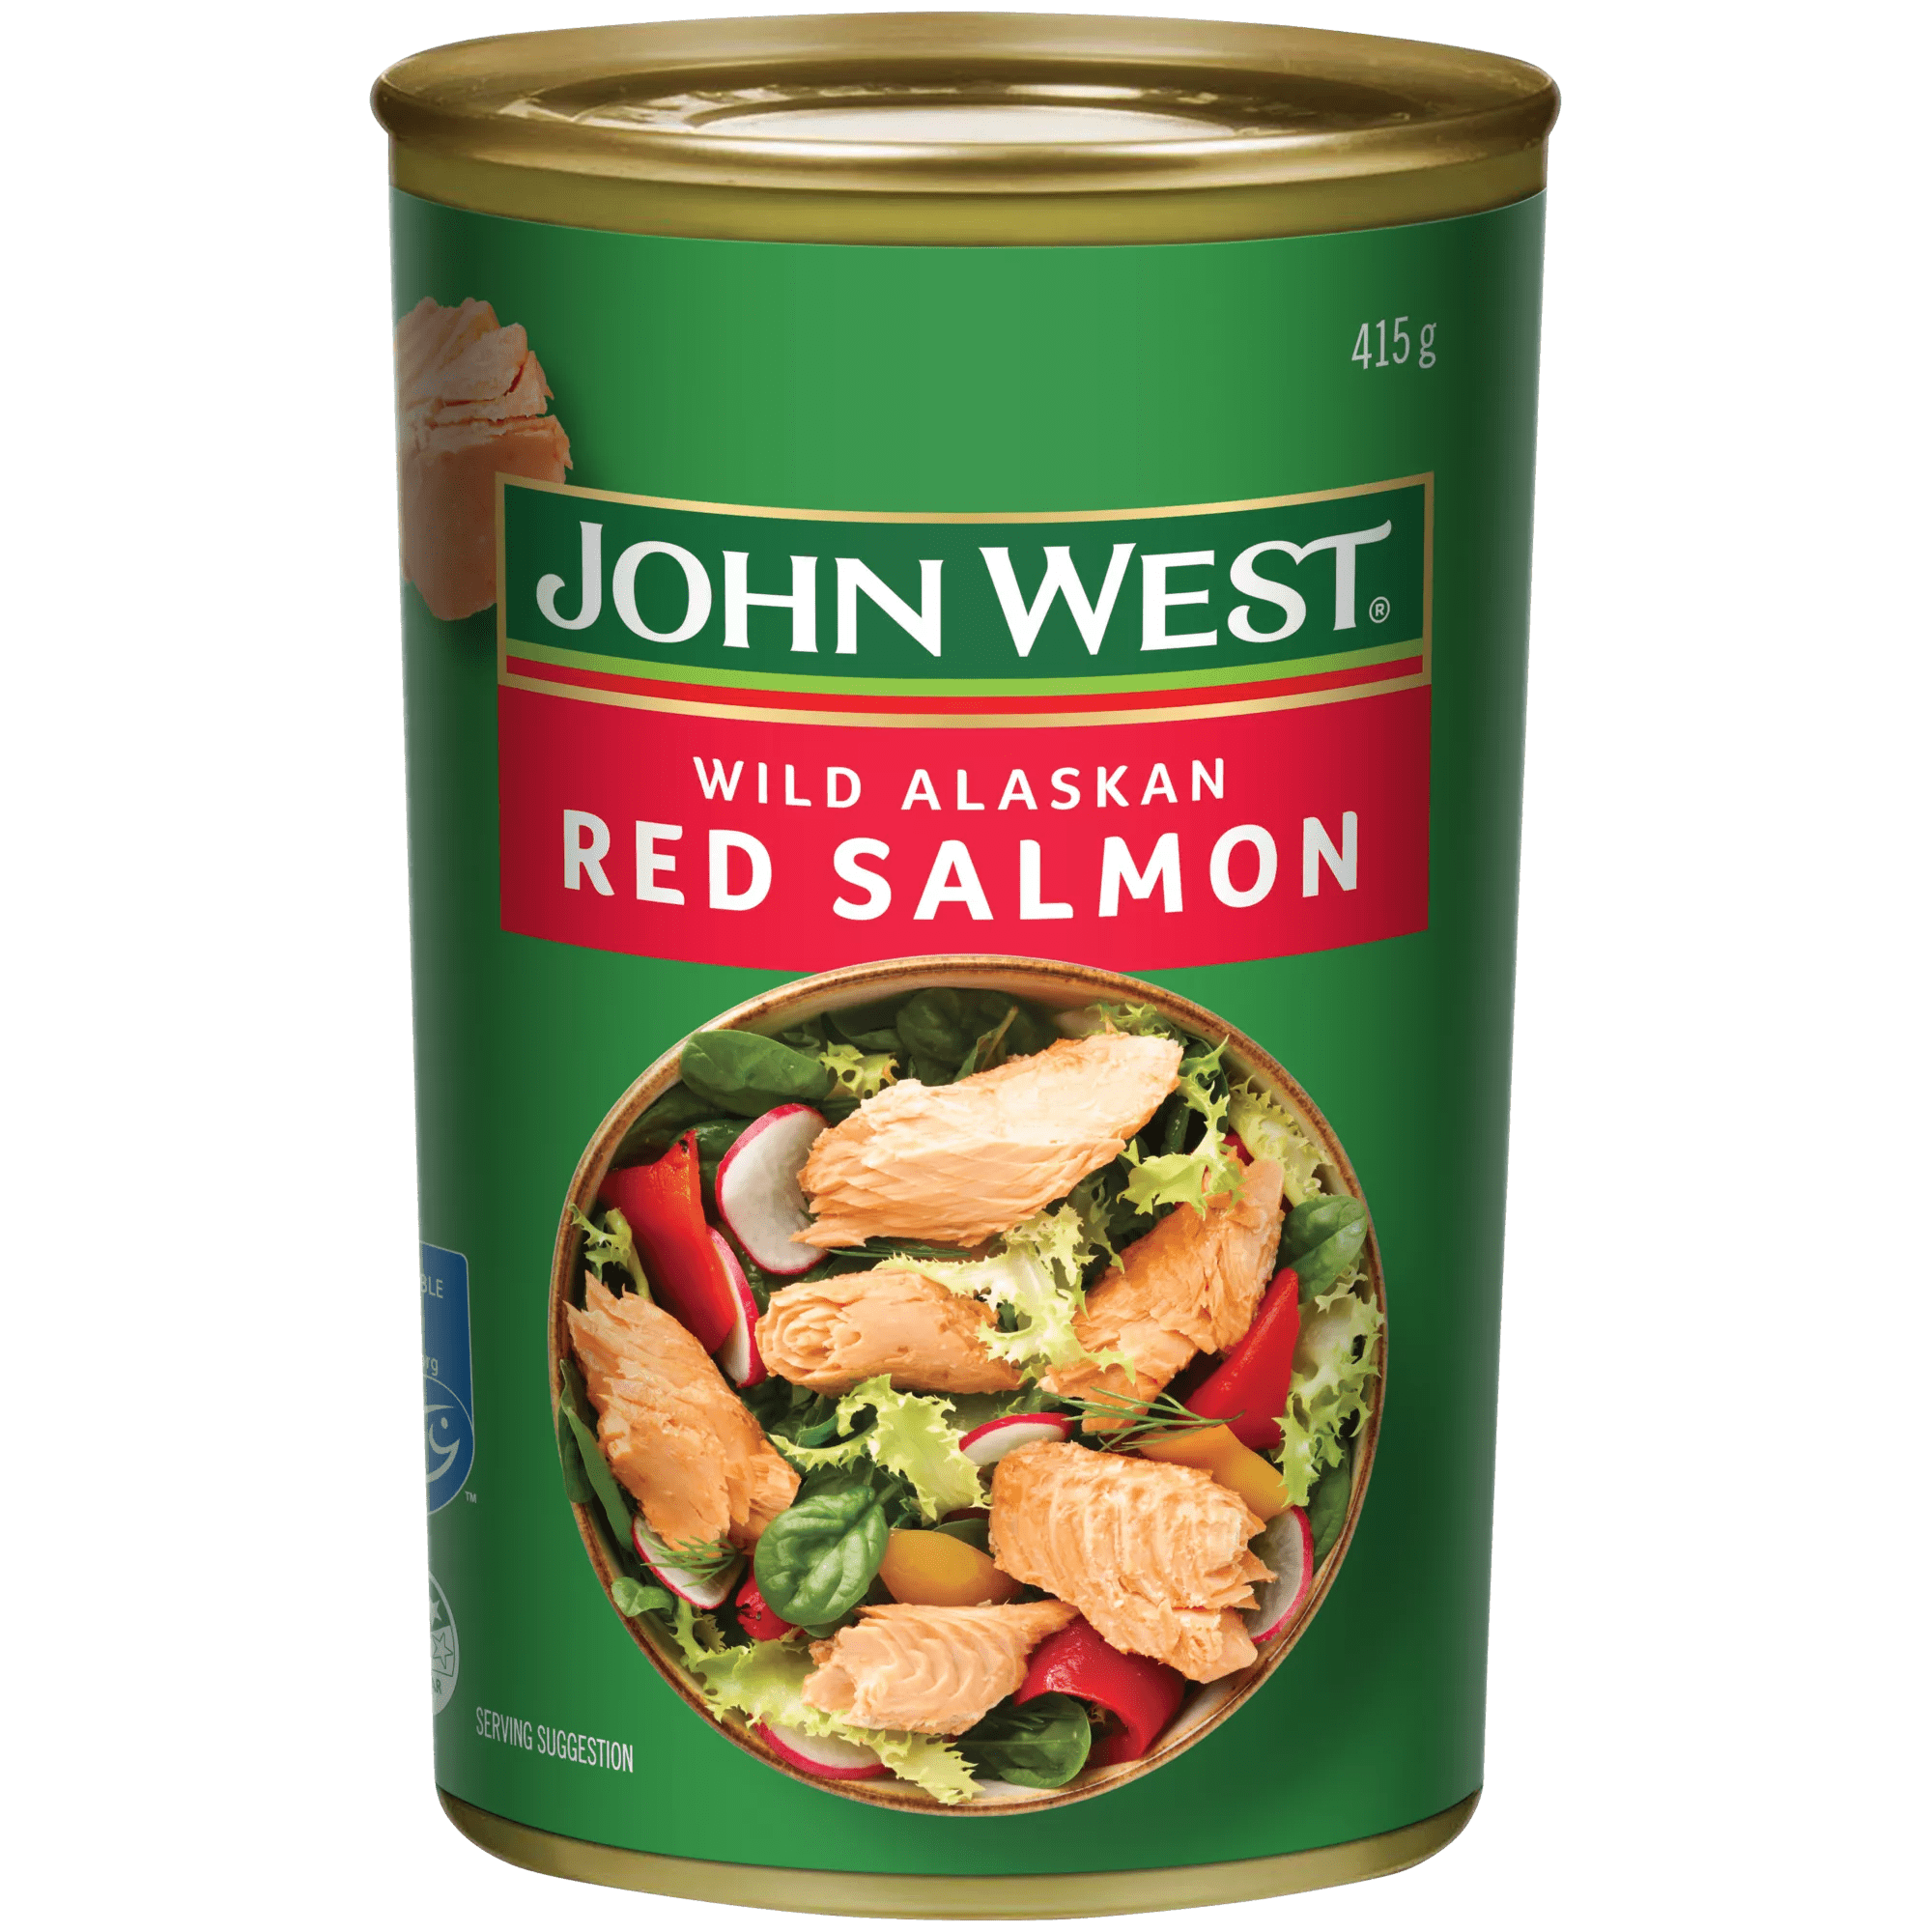 John West Wild Alaskan Red Salmon 415g